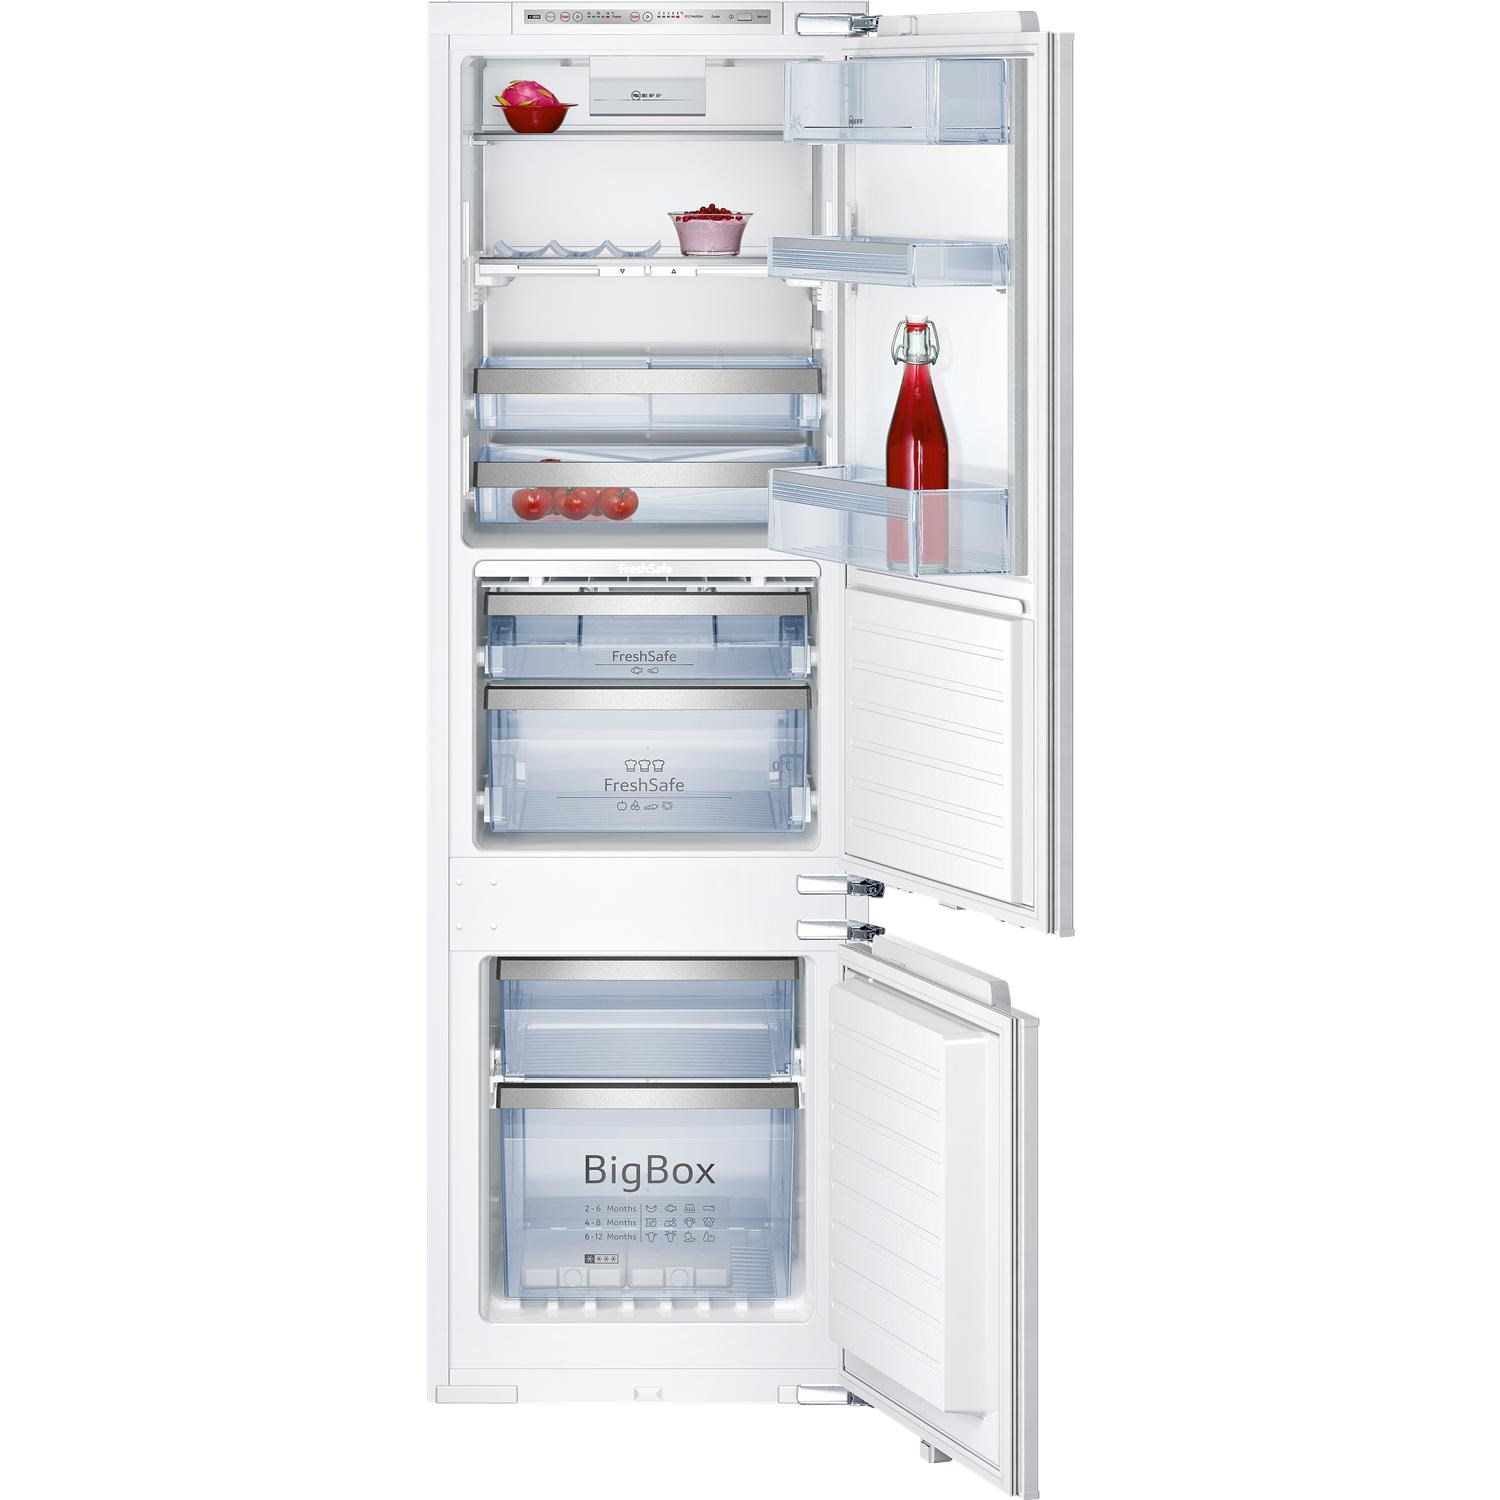 Neff fridge freezer k8524x8gb manual